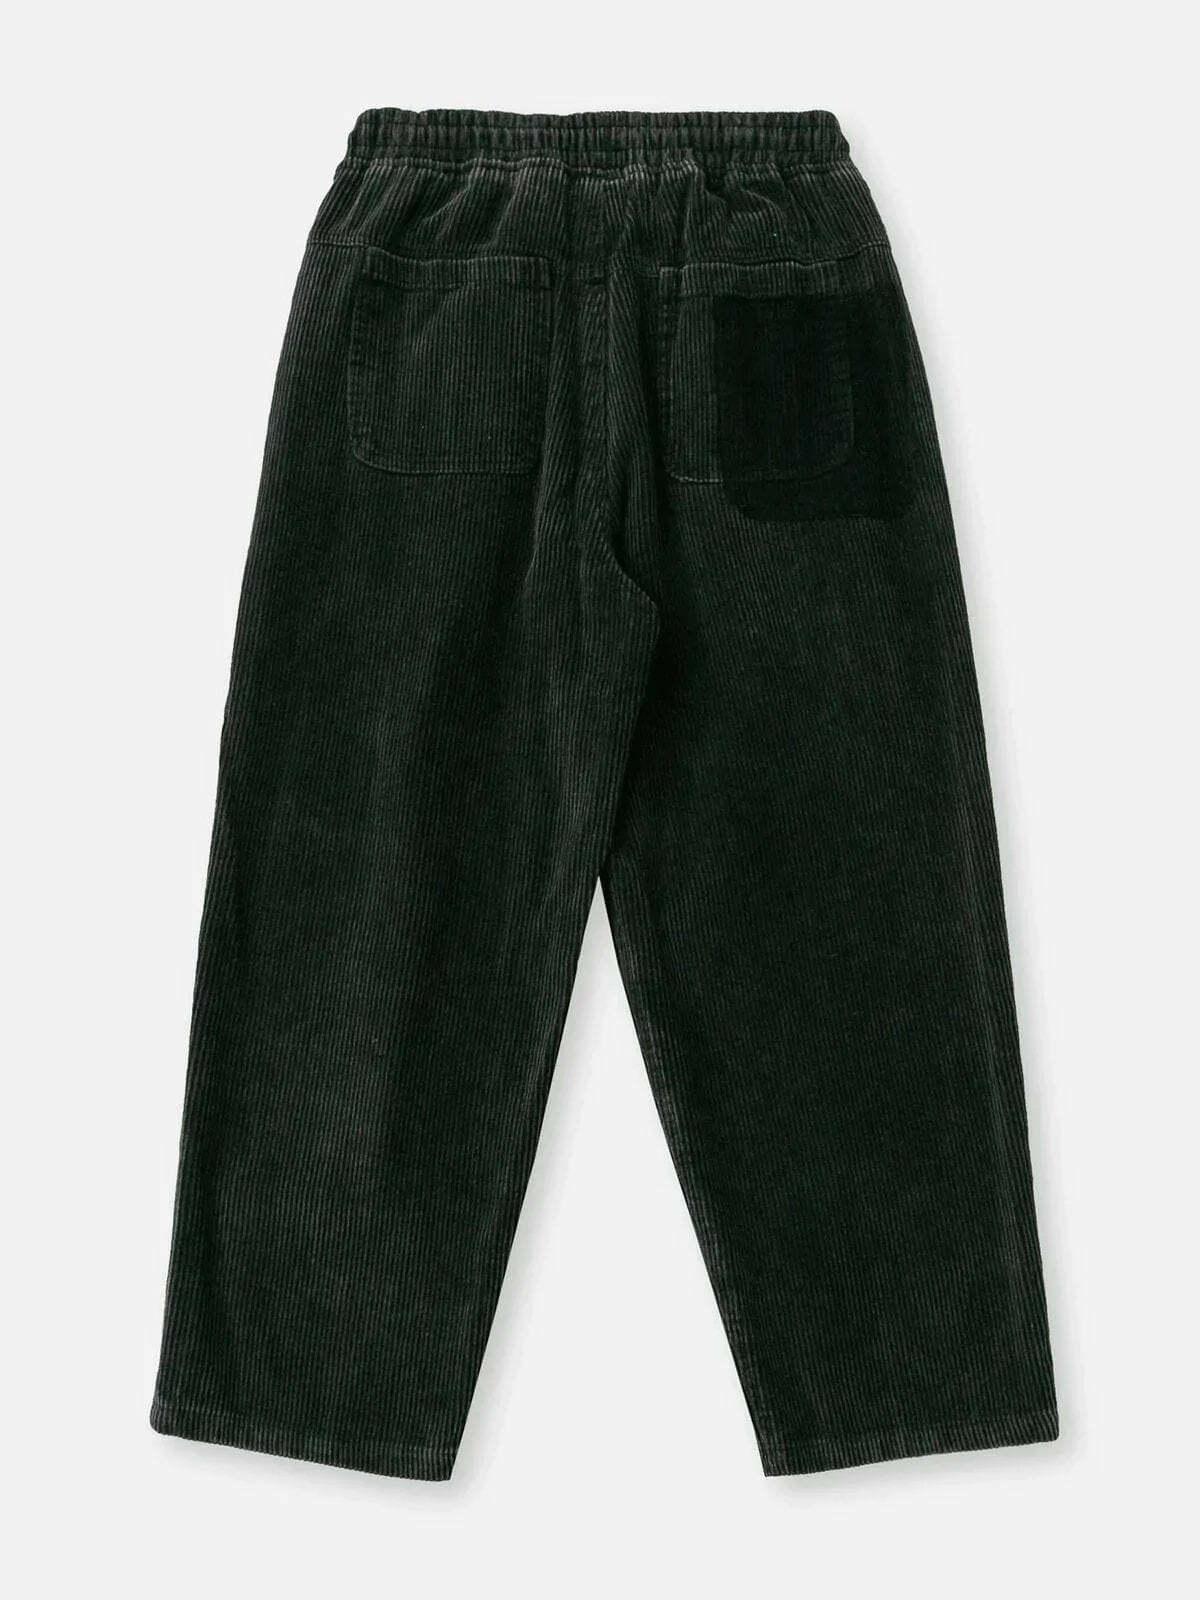 washed corduroy pants retro streetwear essential 5307